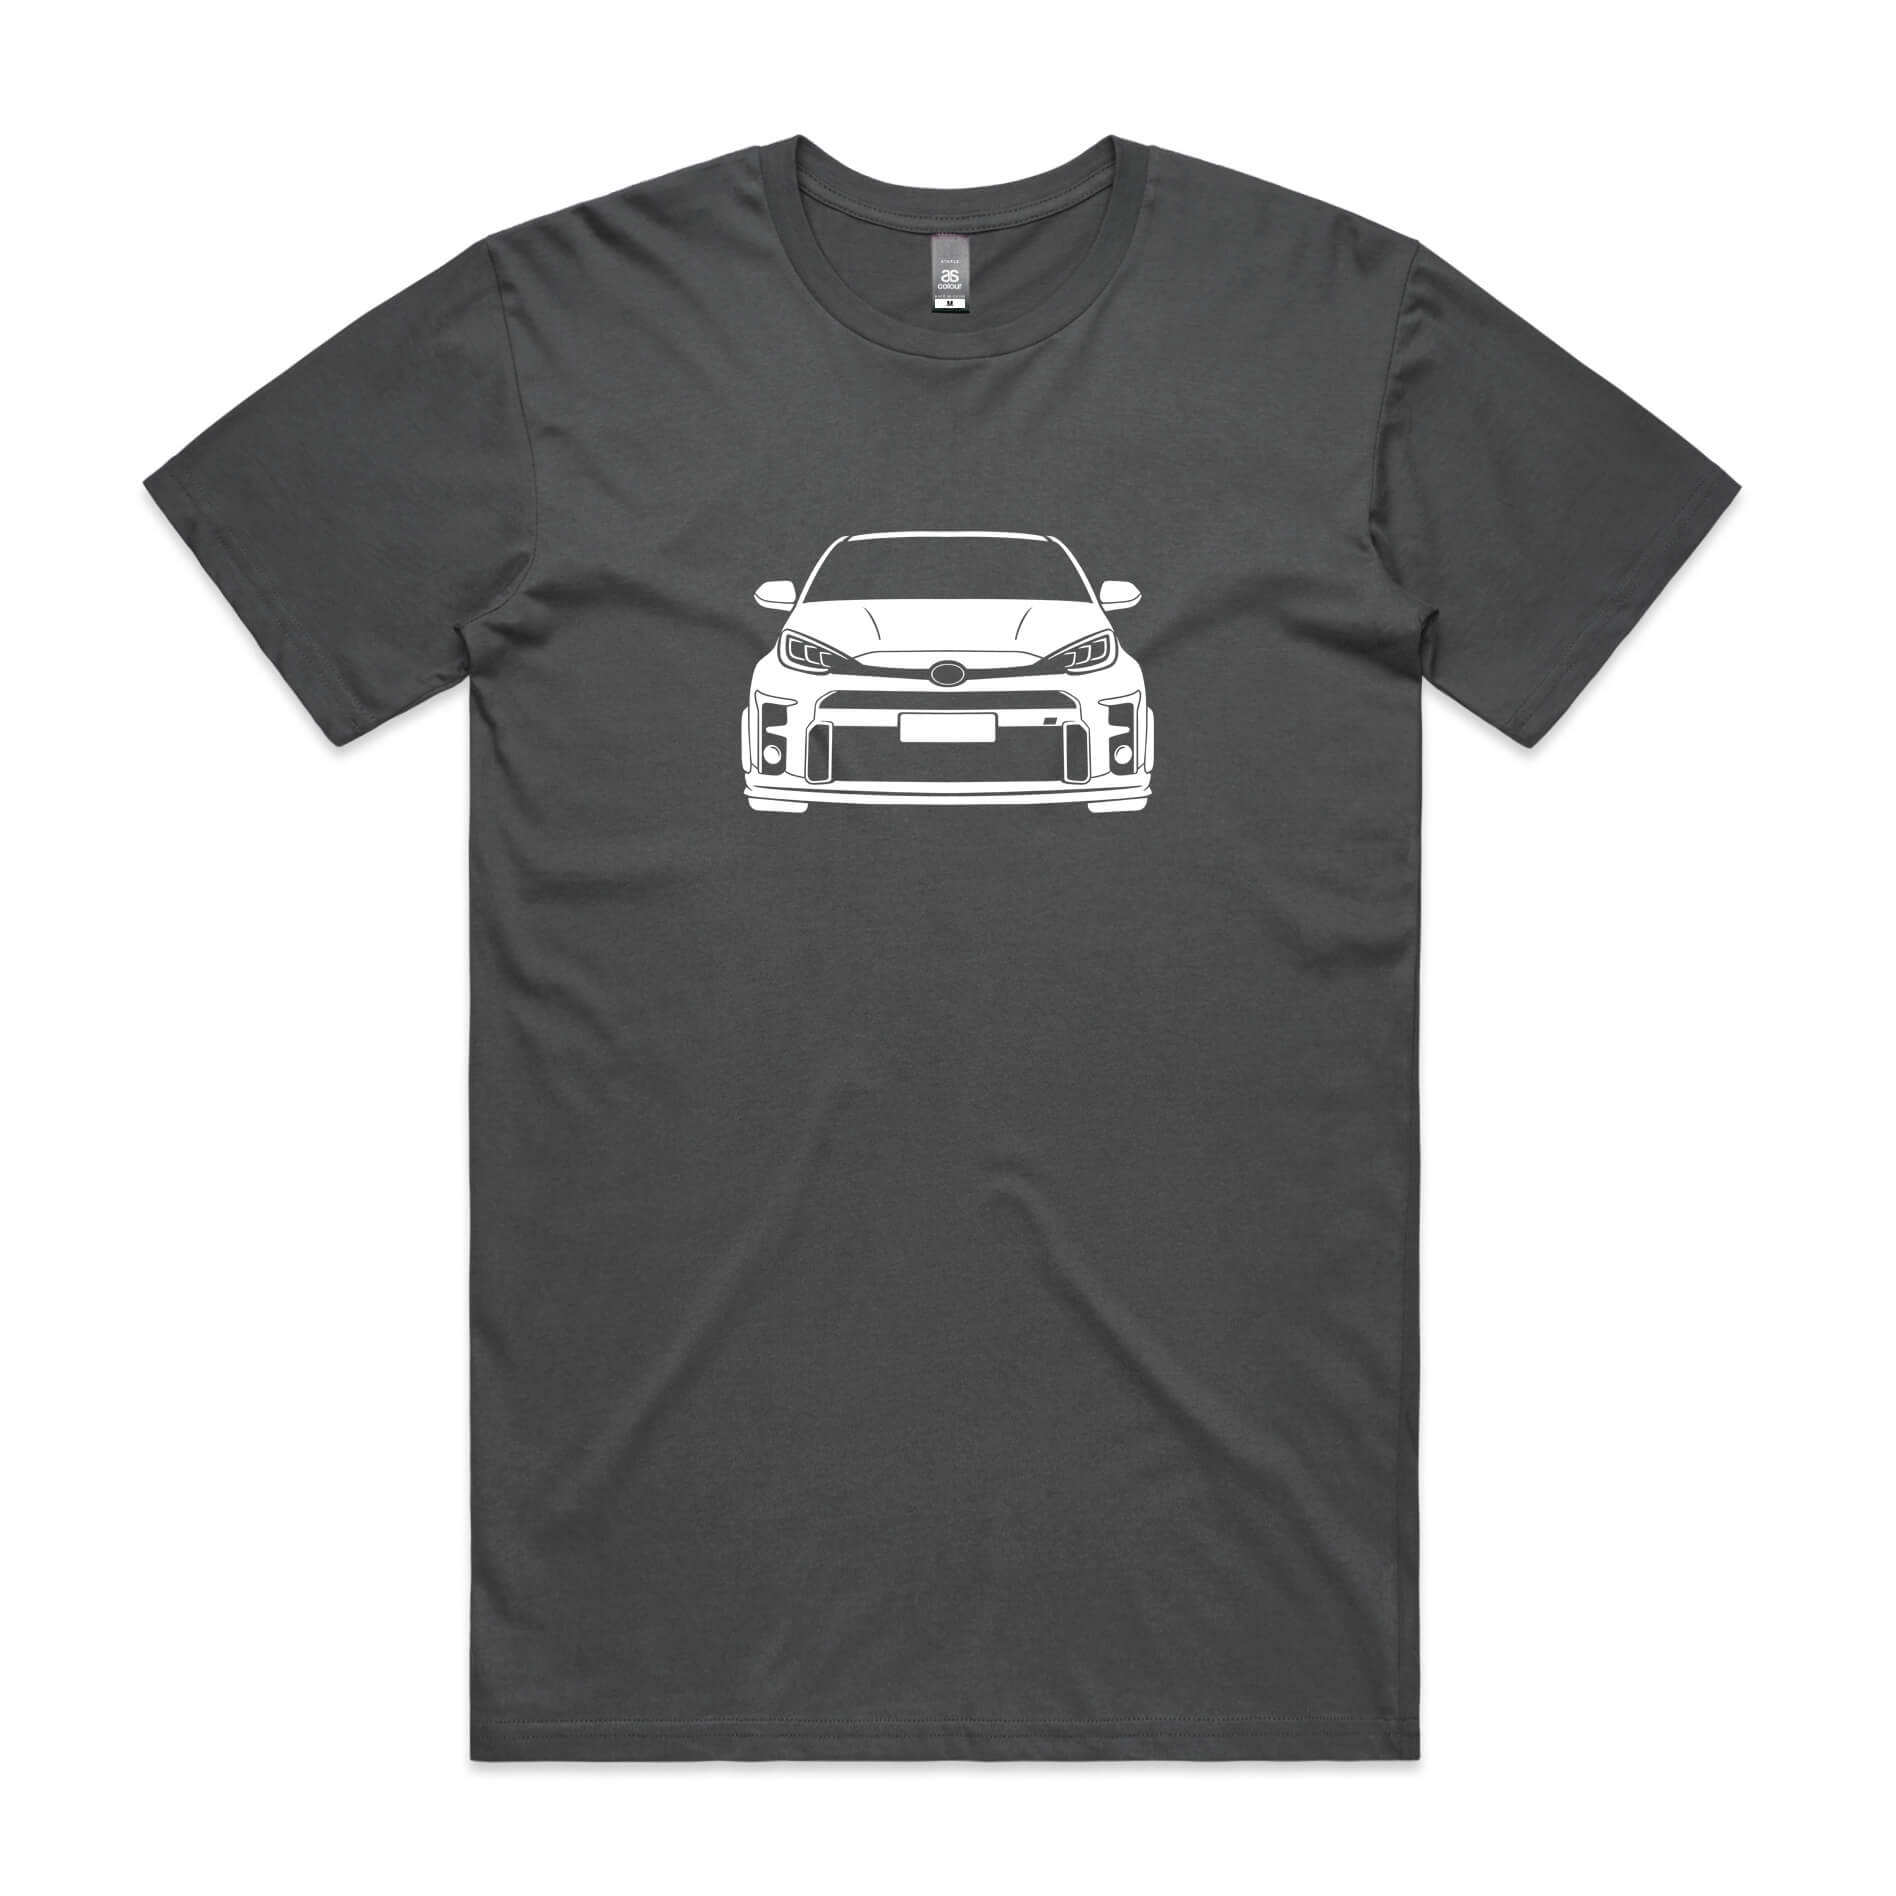 Toyota GR Yaris t-shirt in charcoal grey